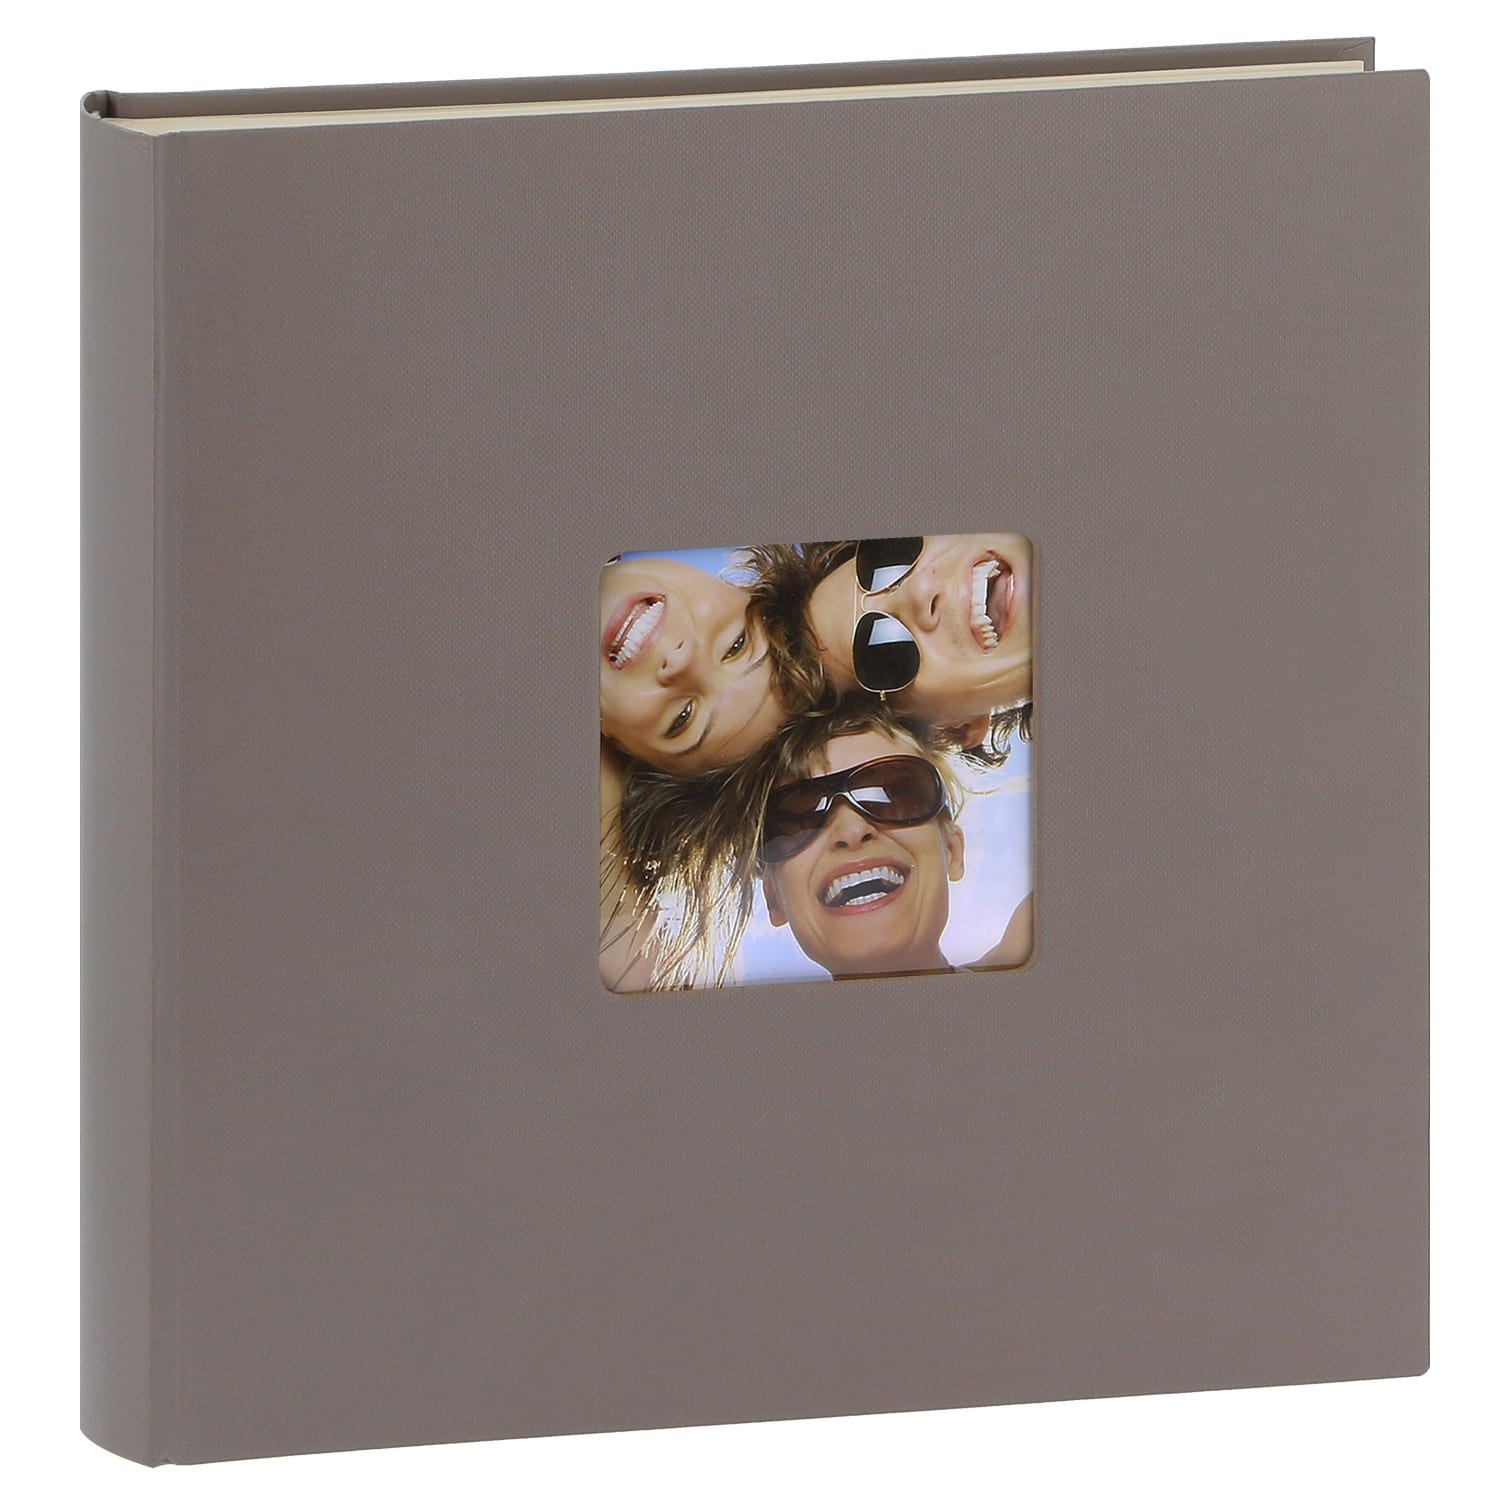 Album photo WALTHER DESIGN traditionnel FUN - 100 pages blanches +  feuillets cristal - 400 photos - Couverture Taupe 30x30cm + fenêtre